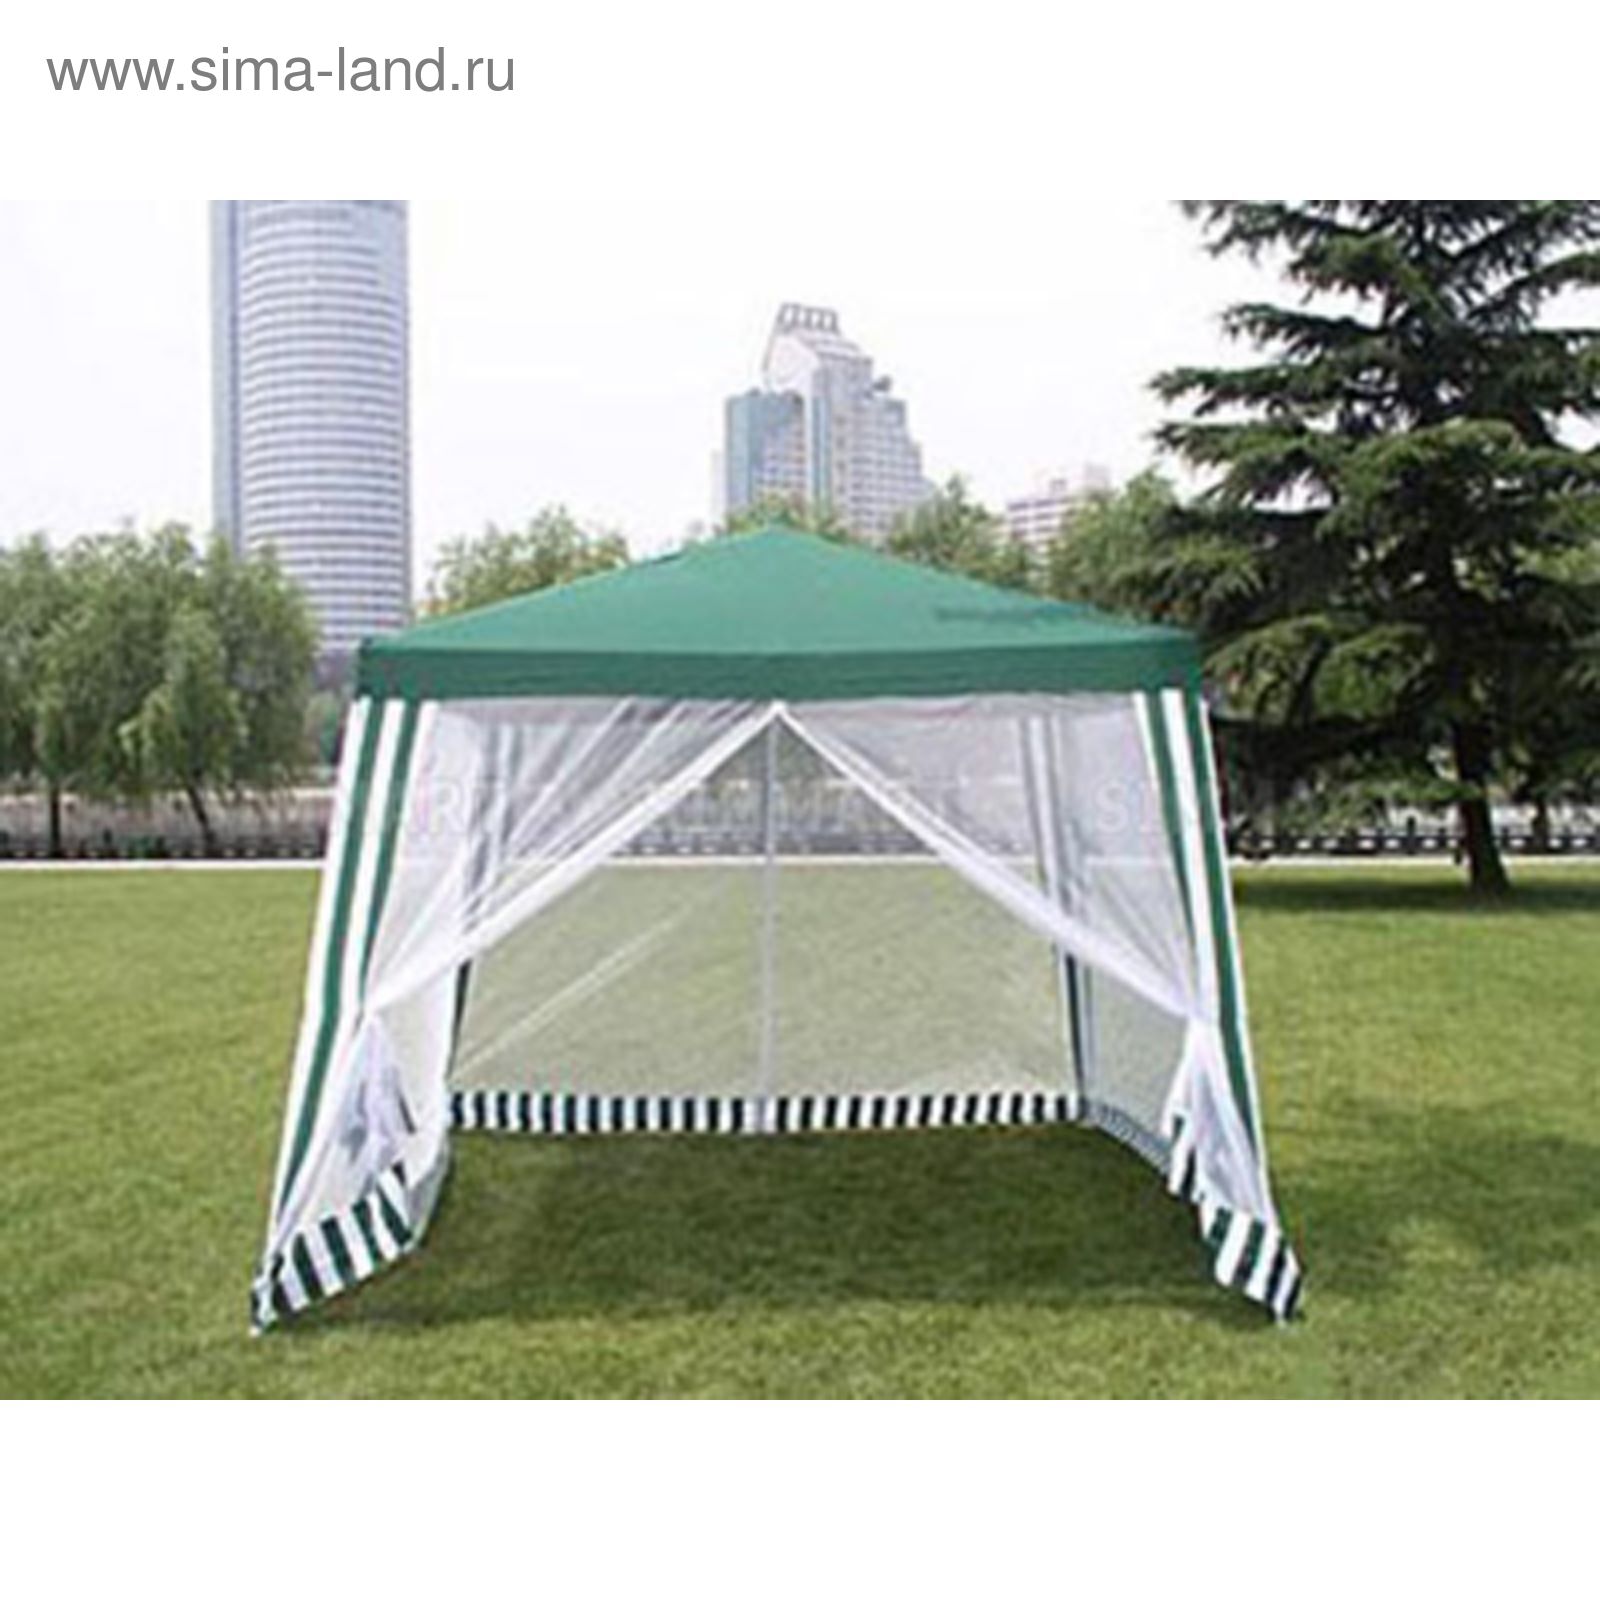 Стенка для шатра с окнами 2х2 м, полиэстер, зеленая